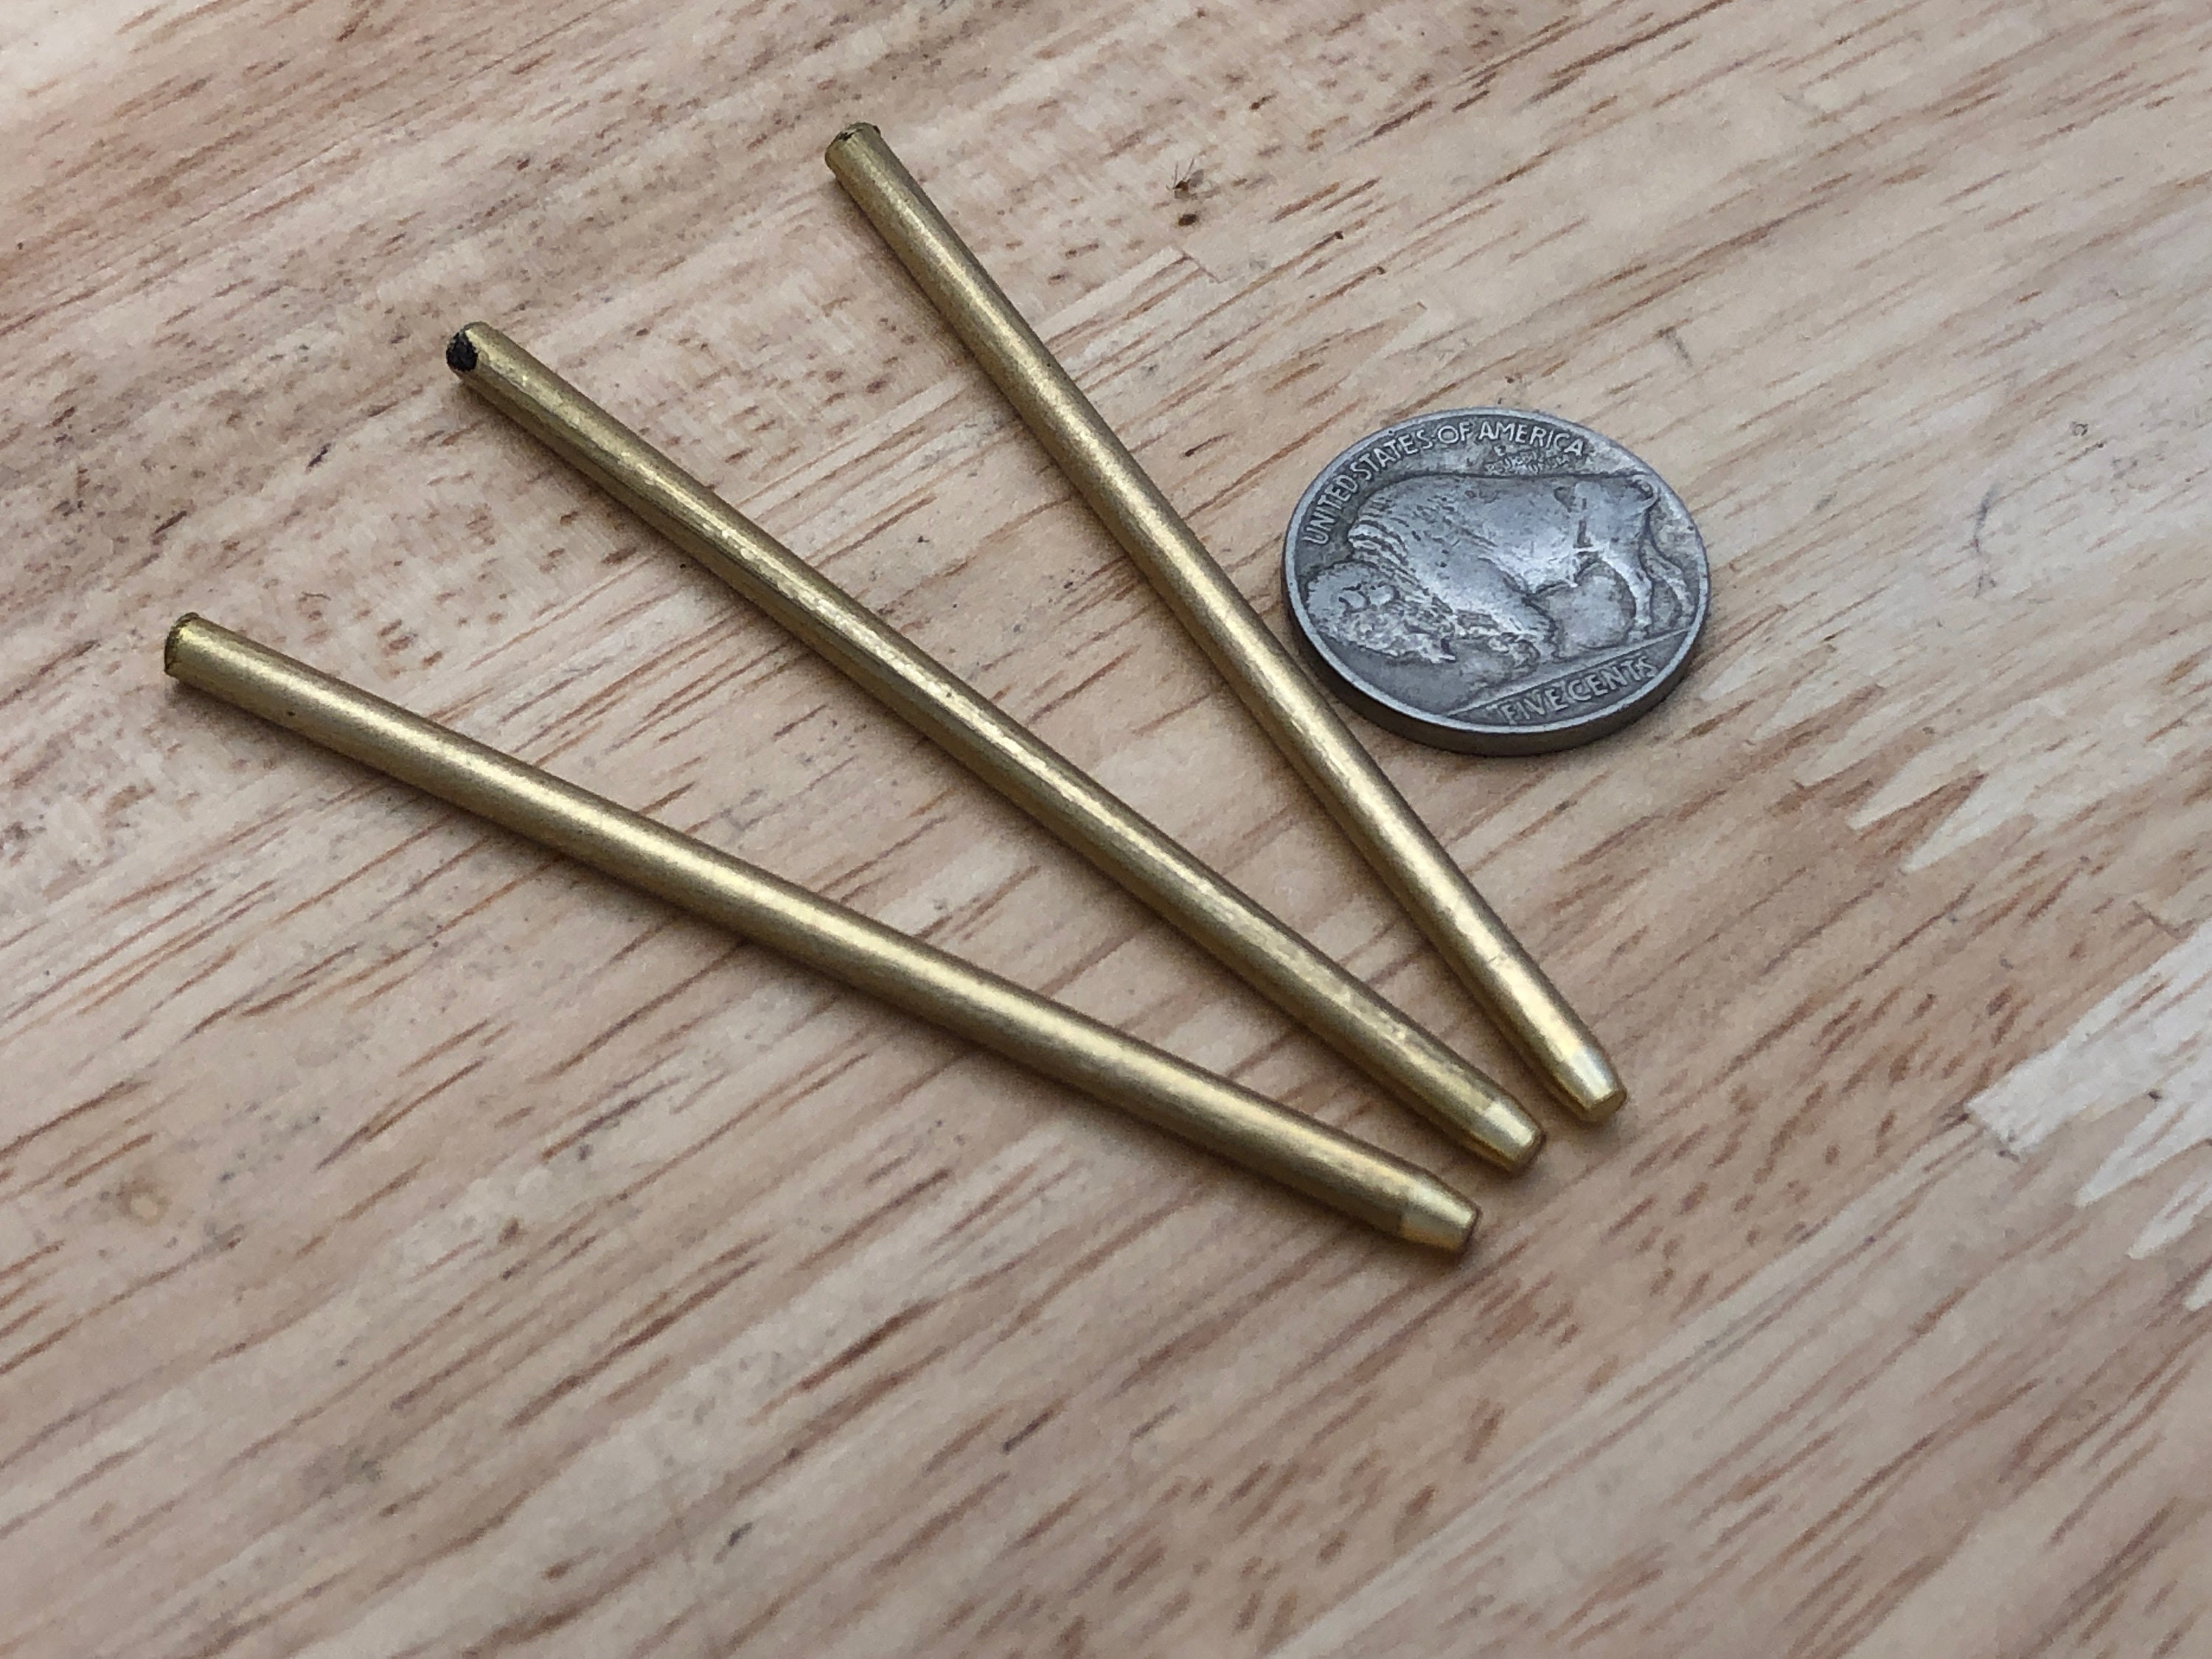 8 Piece Brass Pin Punch Set Sizes 1/16 3/32 1/8 5/32 3/16 7/32 1/4